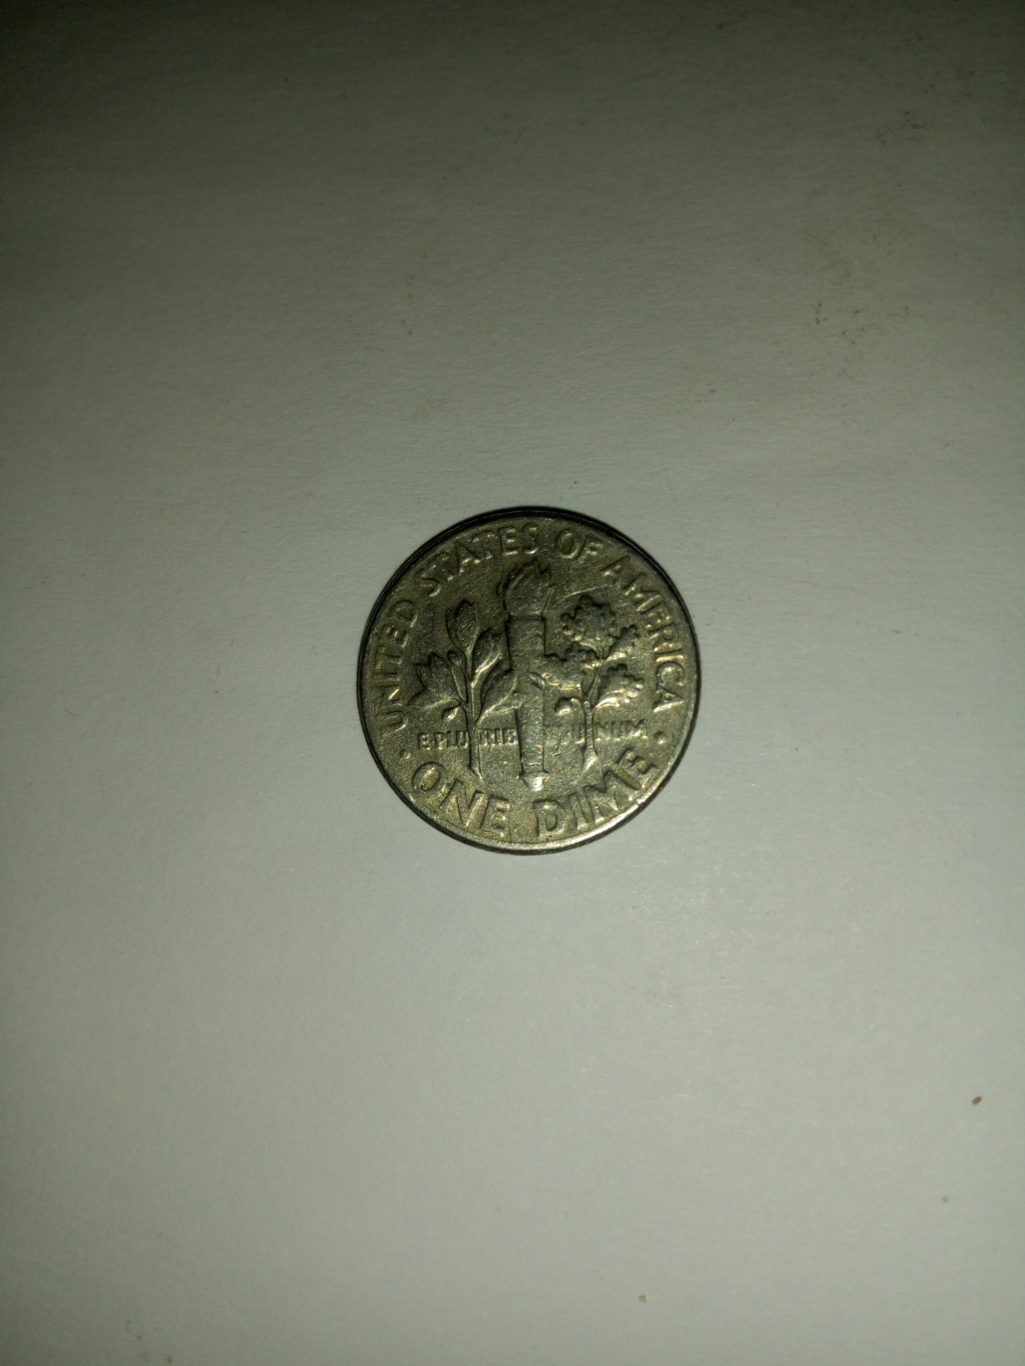 1976_united States of america 1 dime